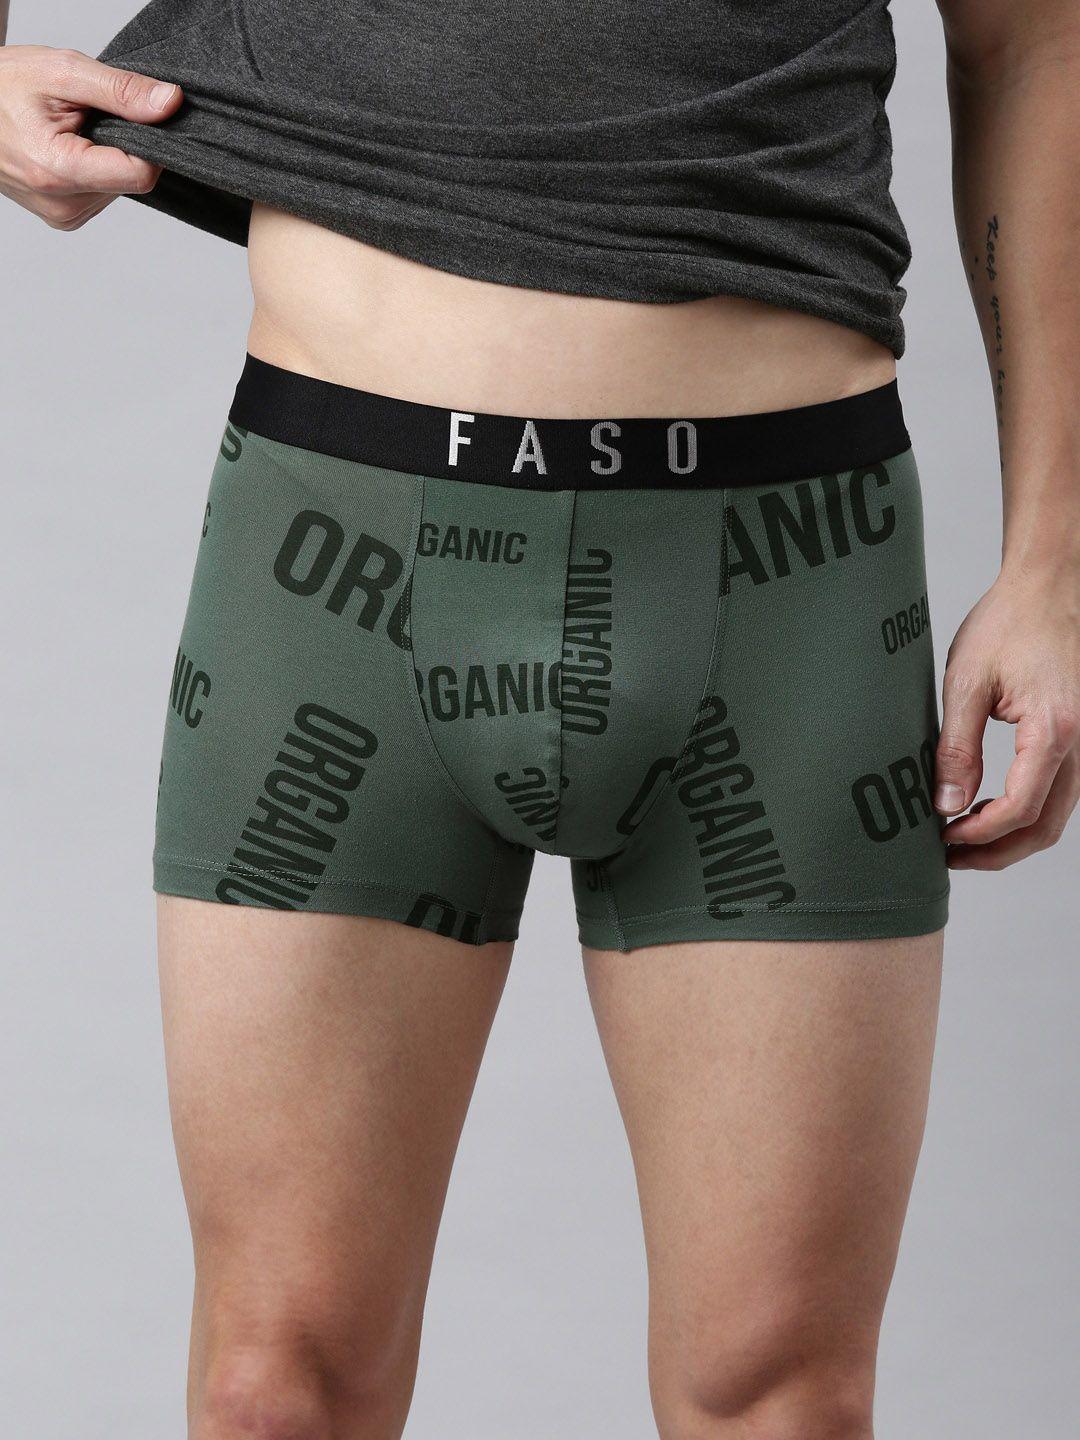 faso typography printed organic cotton breathability trunks fs3007-sq-olivegreen